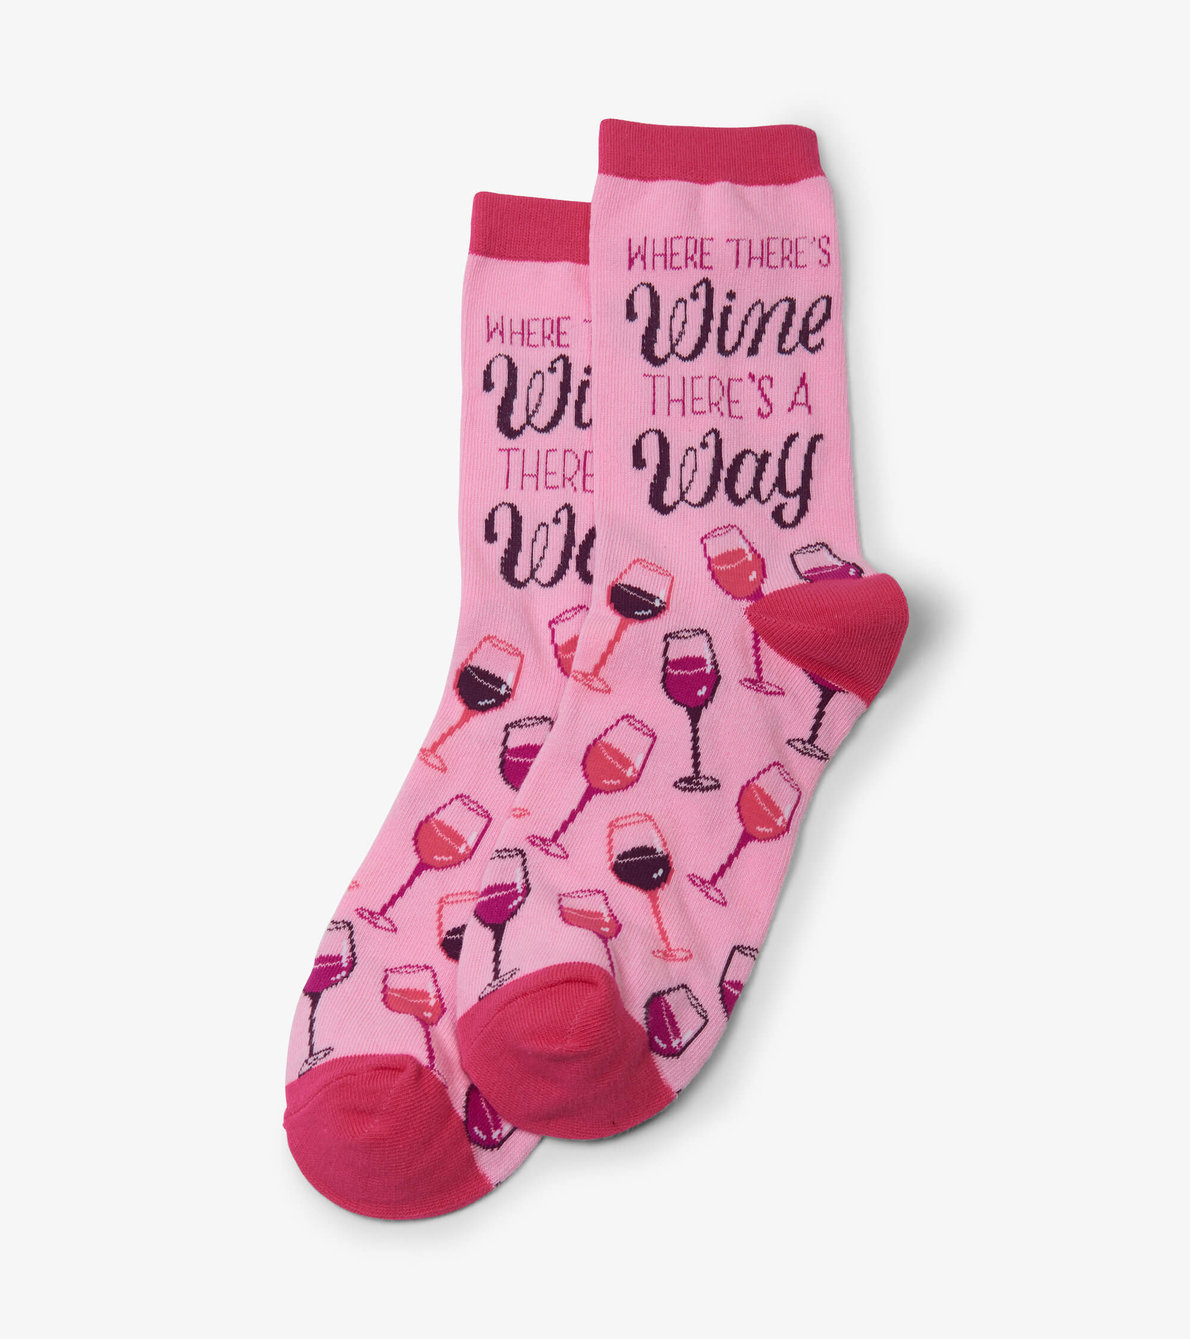 View larger image of Wine Way Women's Crew socks